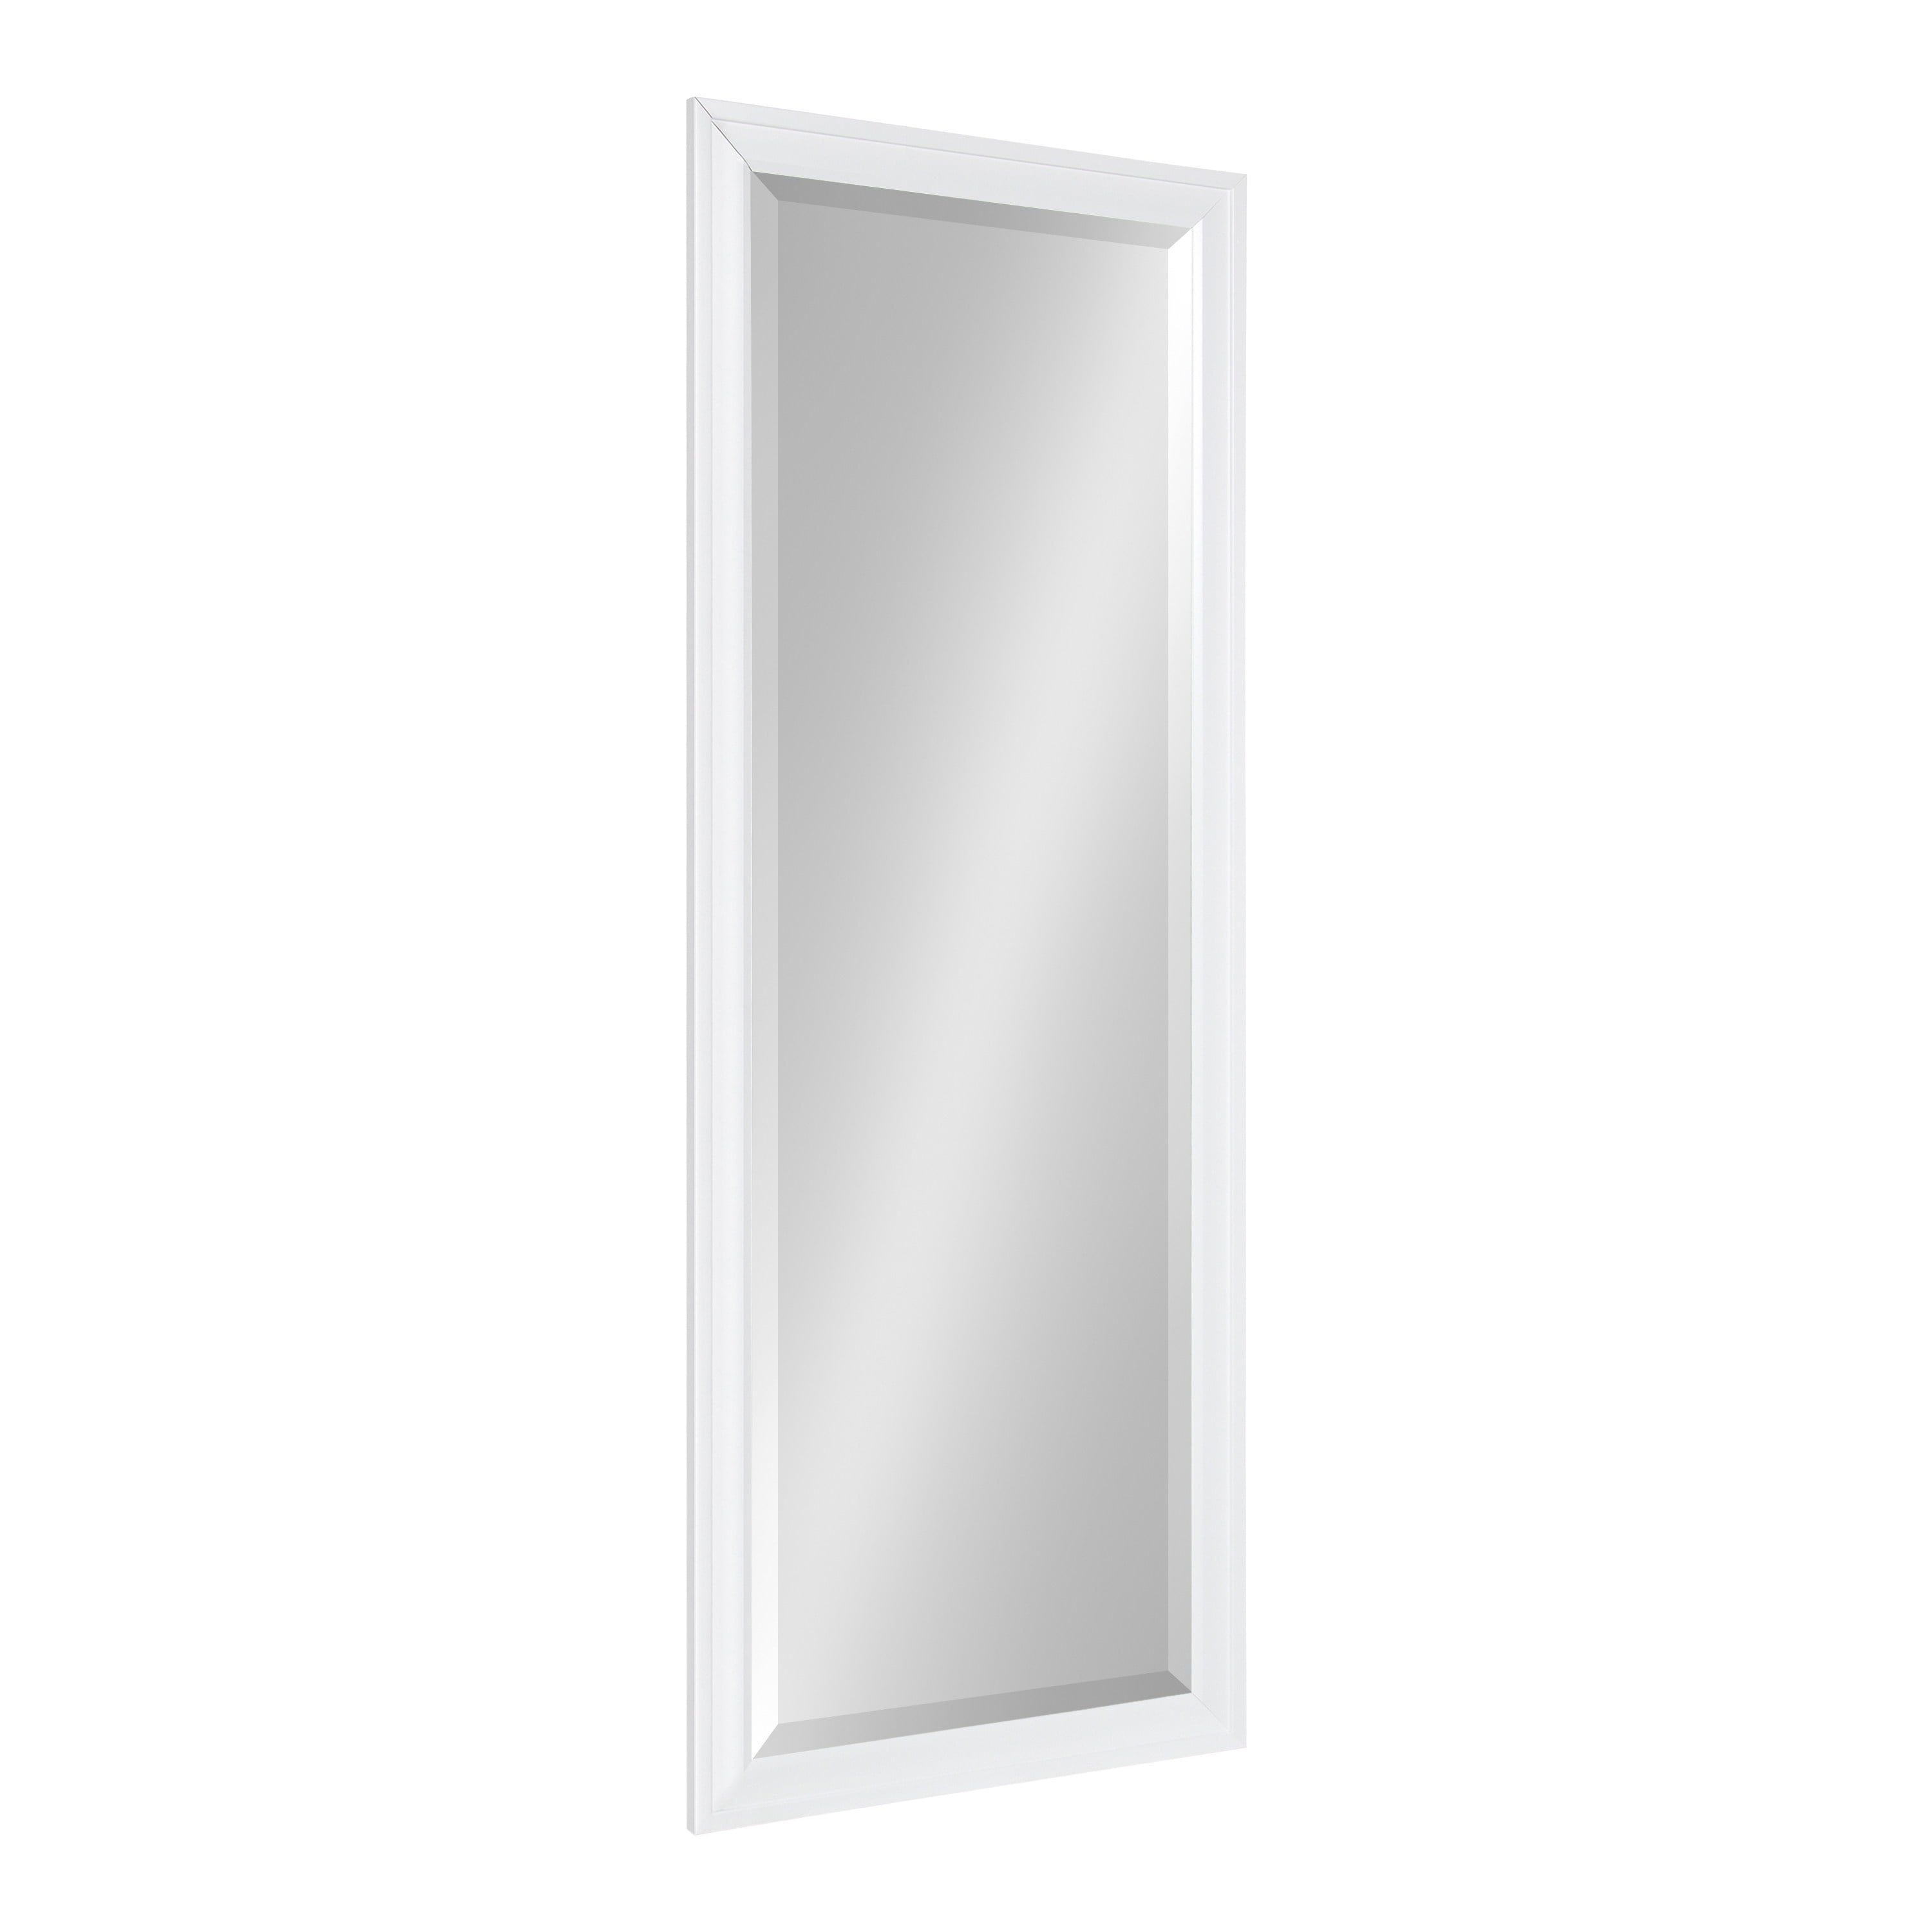 DesignOvation Bosc Modern Framed Rectangular Wall Mirror, 19.5 x 51.5,  White, Decorative Tall Mirror with Rectangular Shape and Vibrant Beveled  Edge for Wall Decor